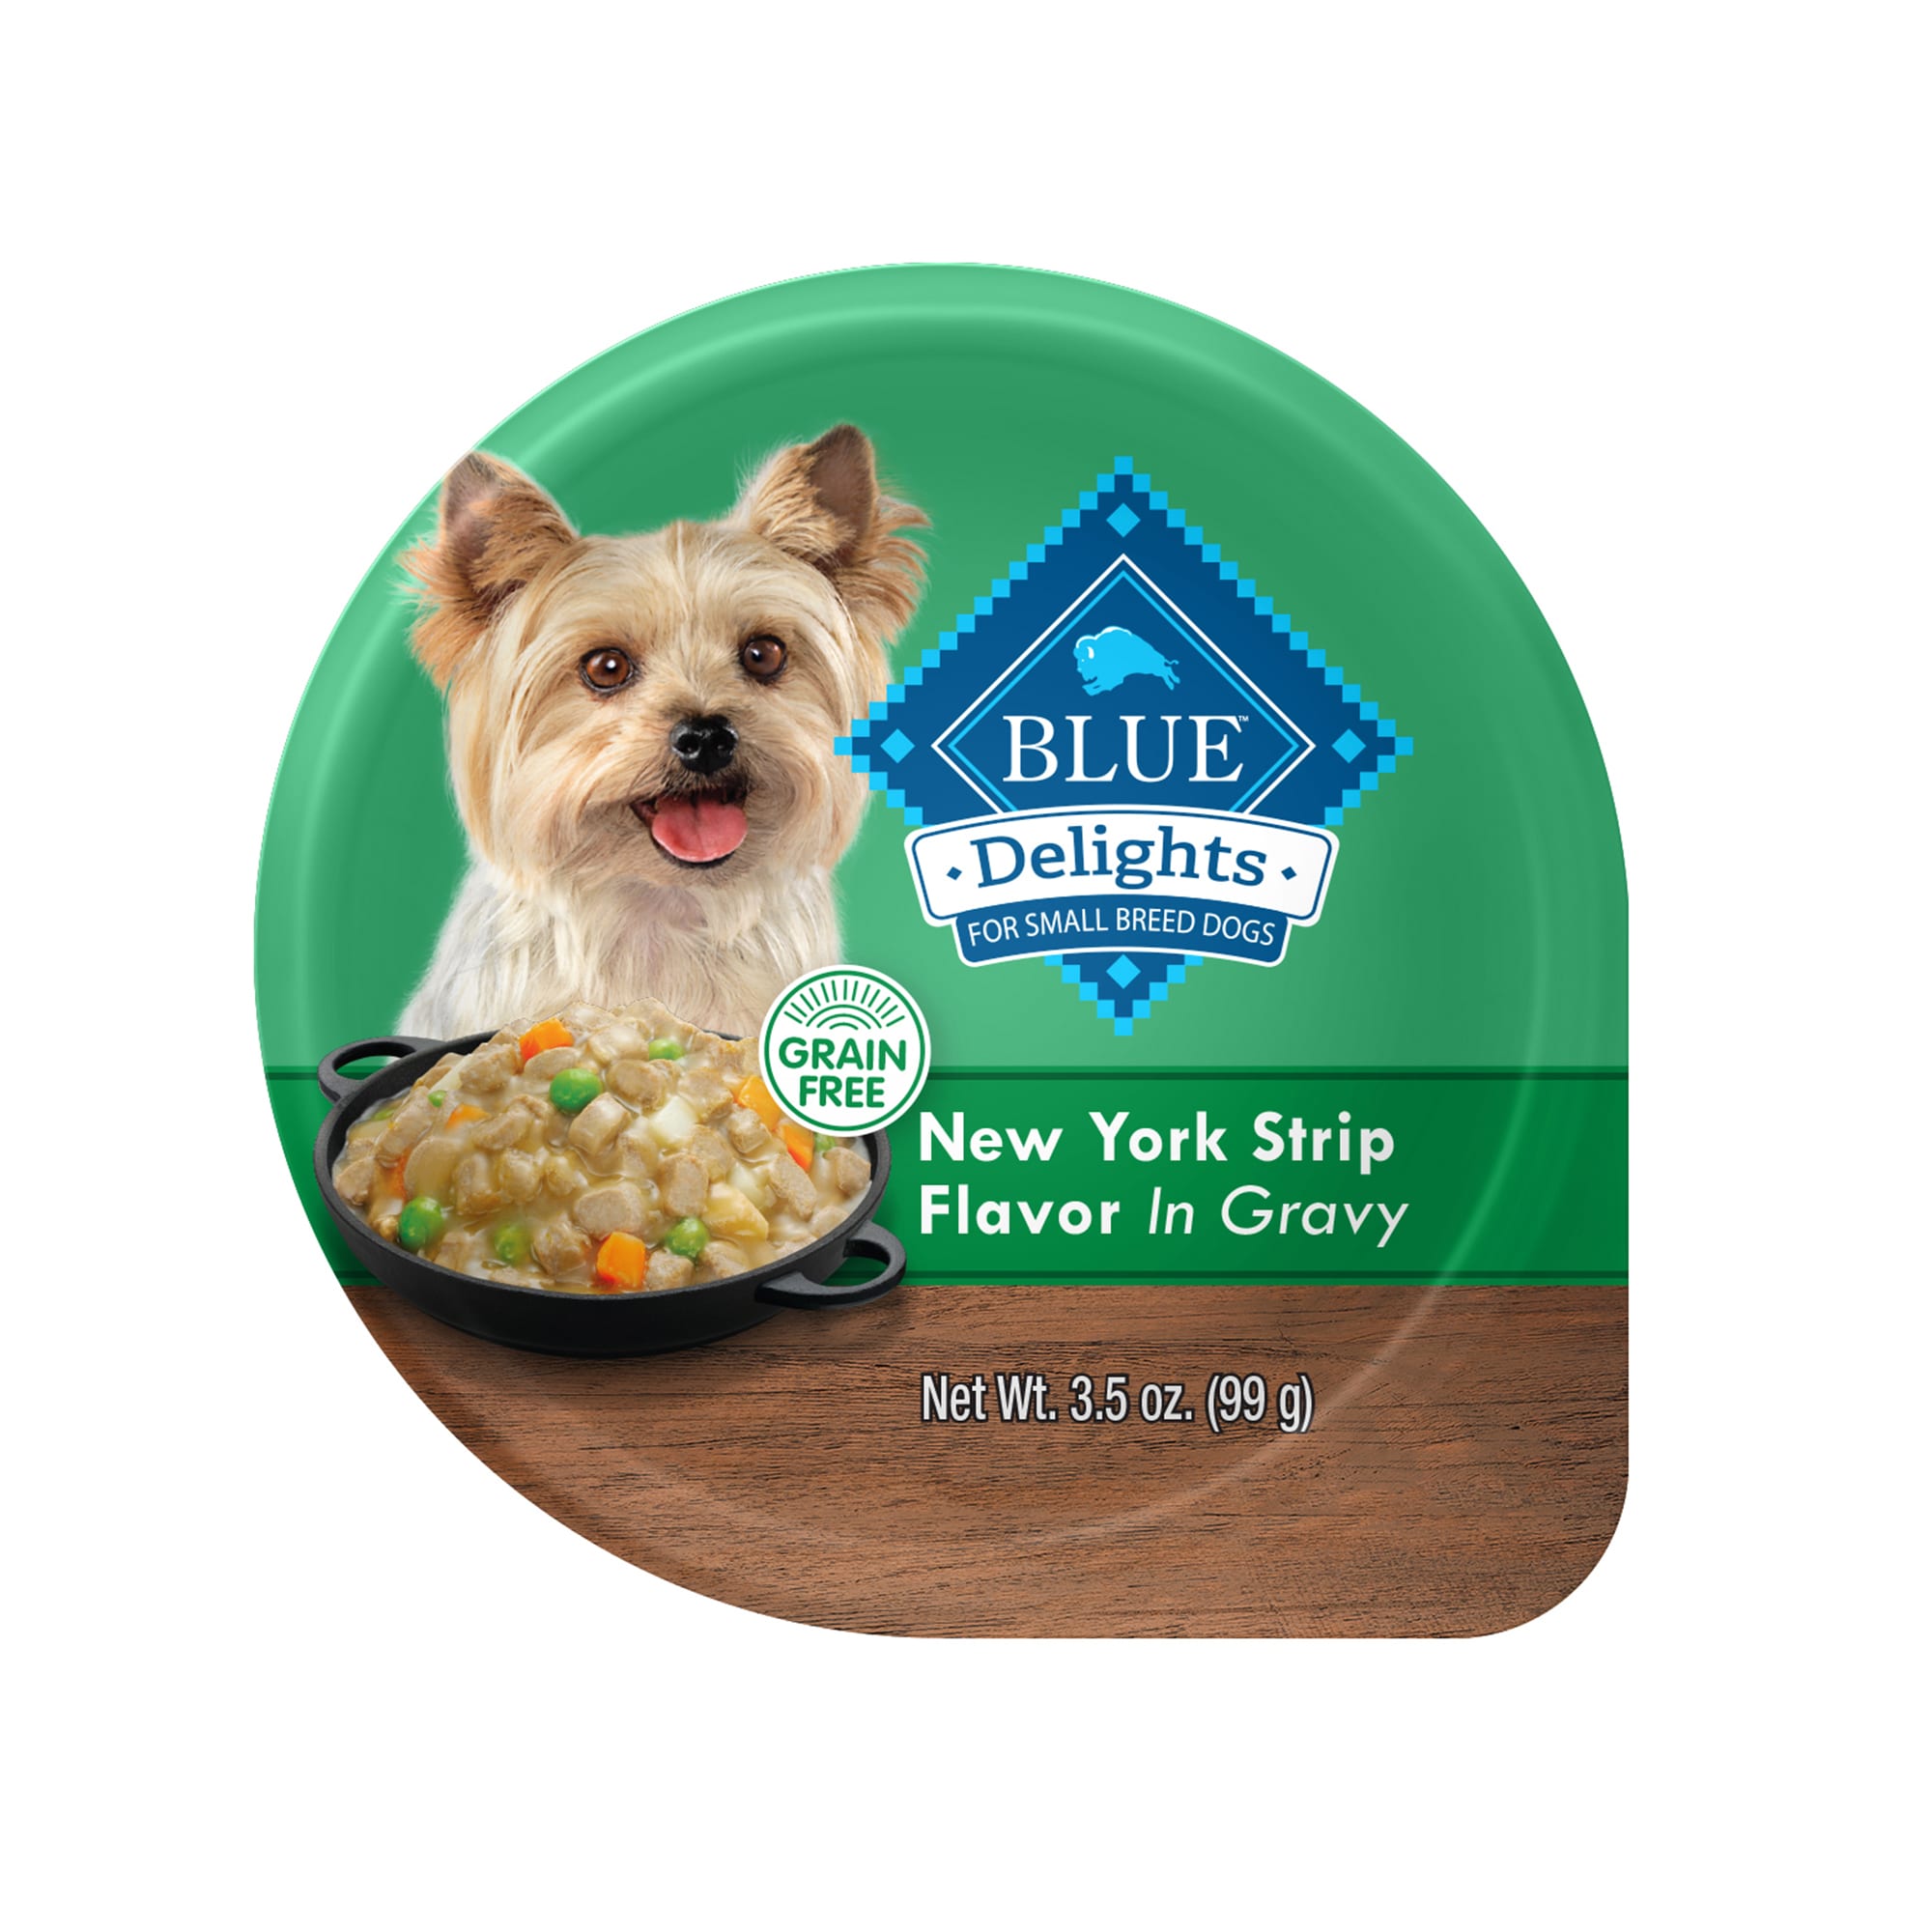 Dogit Elevated Dog Dish-Blue, Small - Hilton, NY - Pet Friendly